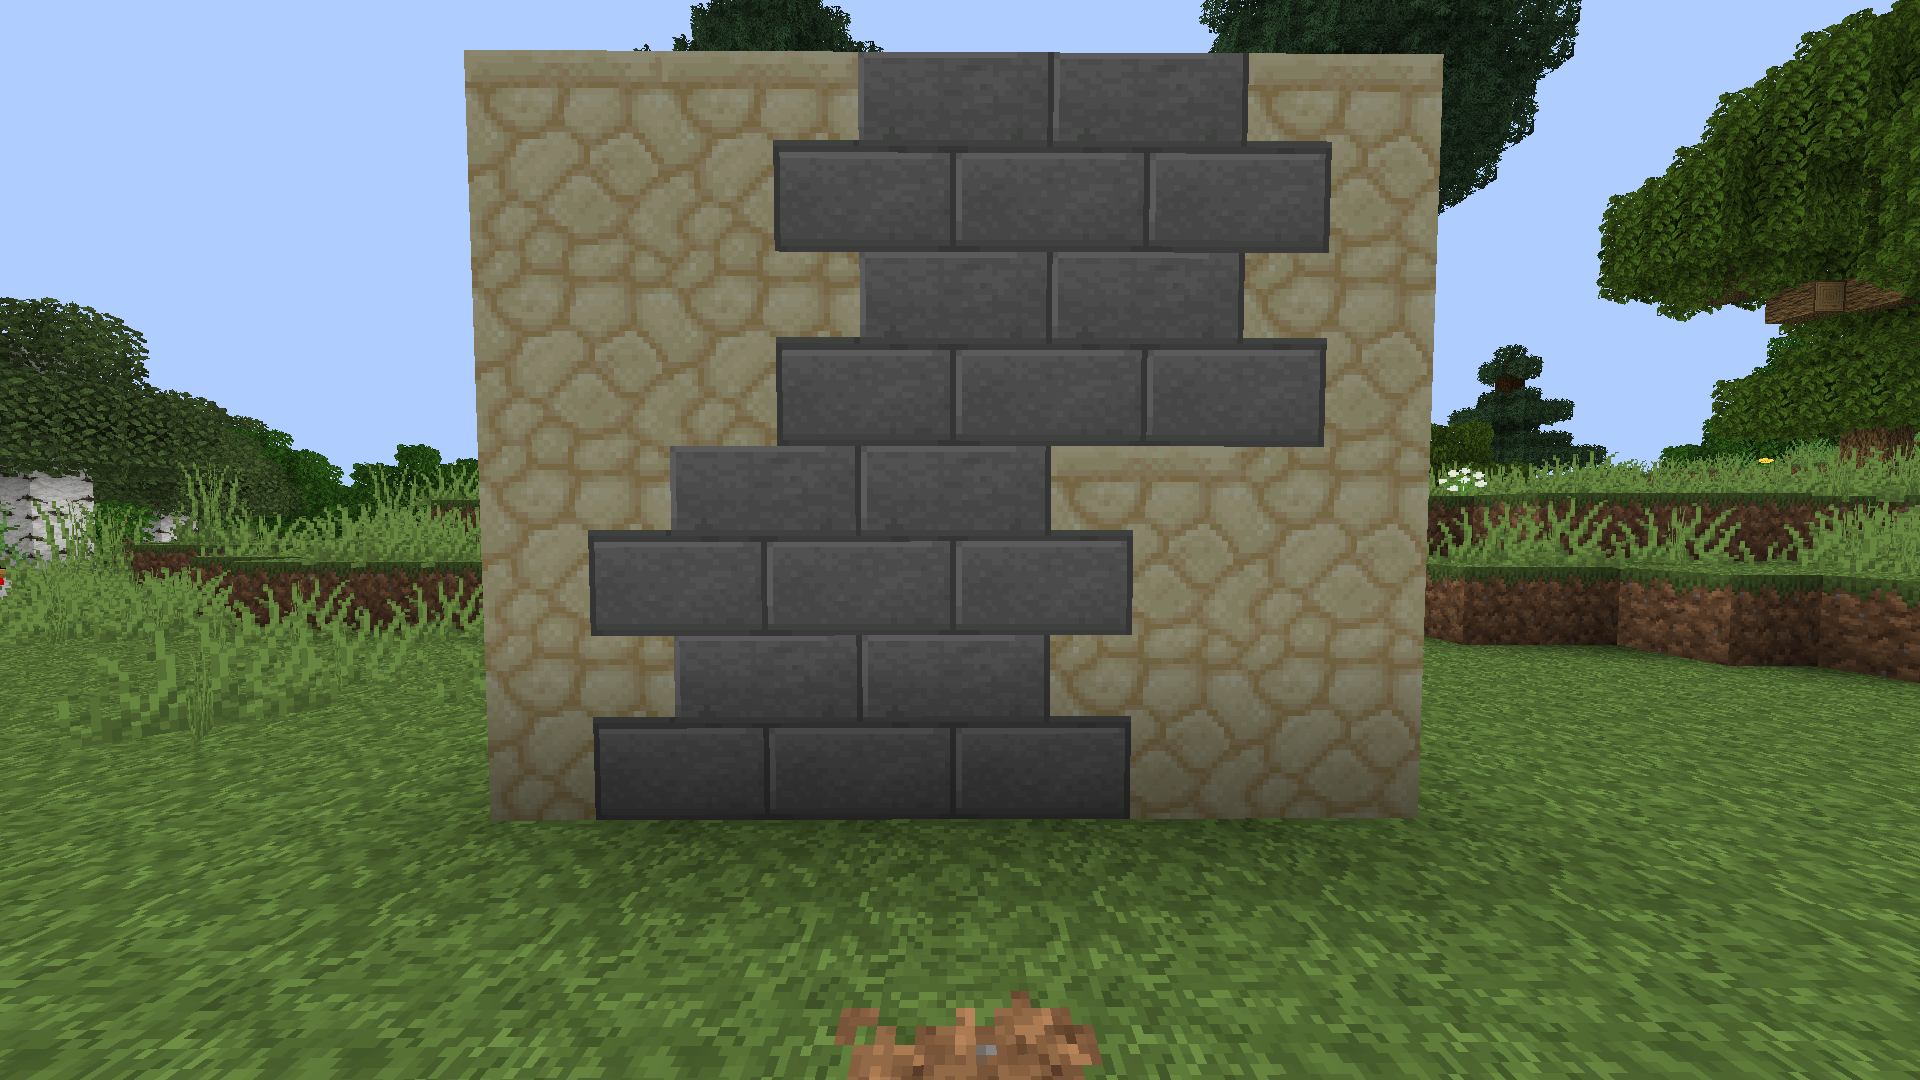 Sandstone + Stone Bricks